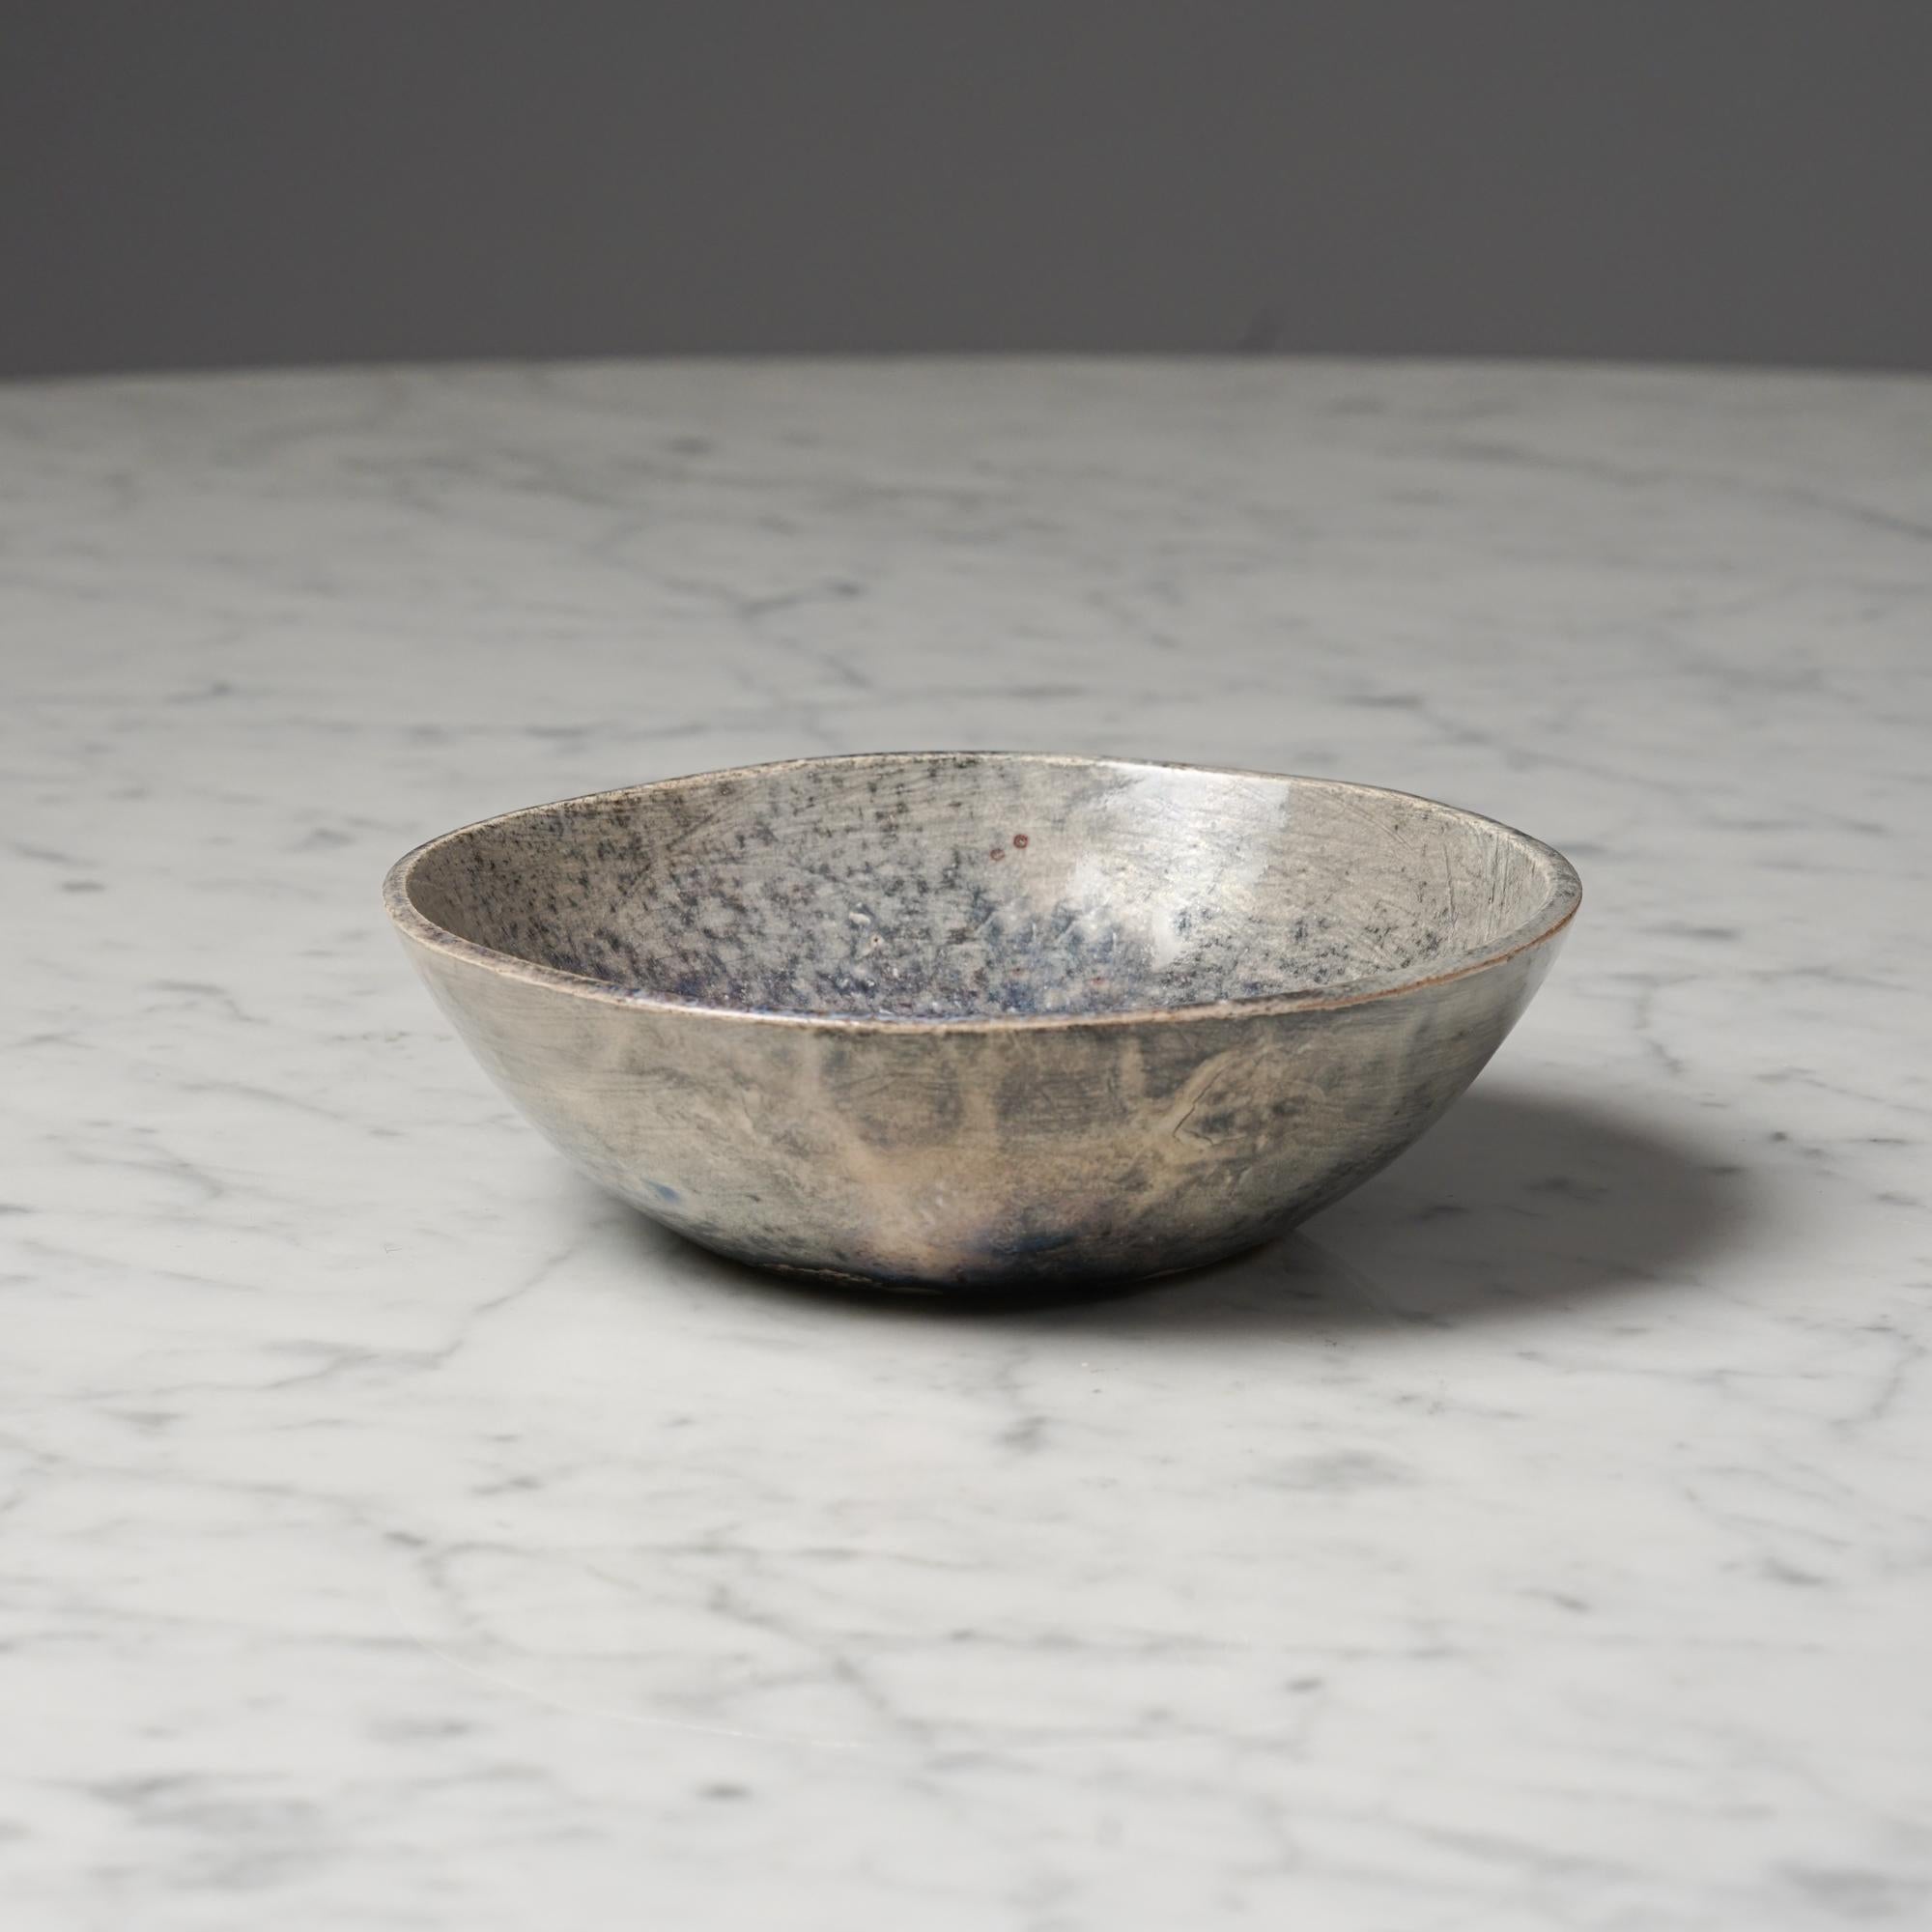 20th Century Scandinavian Modern Ceramic Bowl by Marita Lybeck, 1950s/1960s For Sale